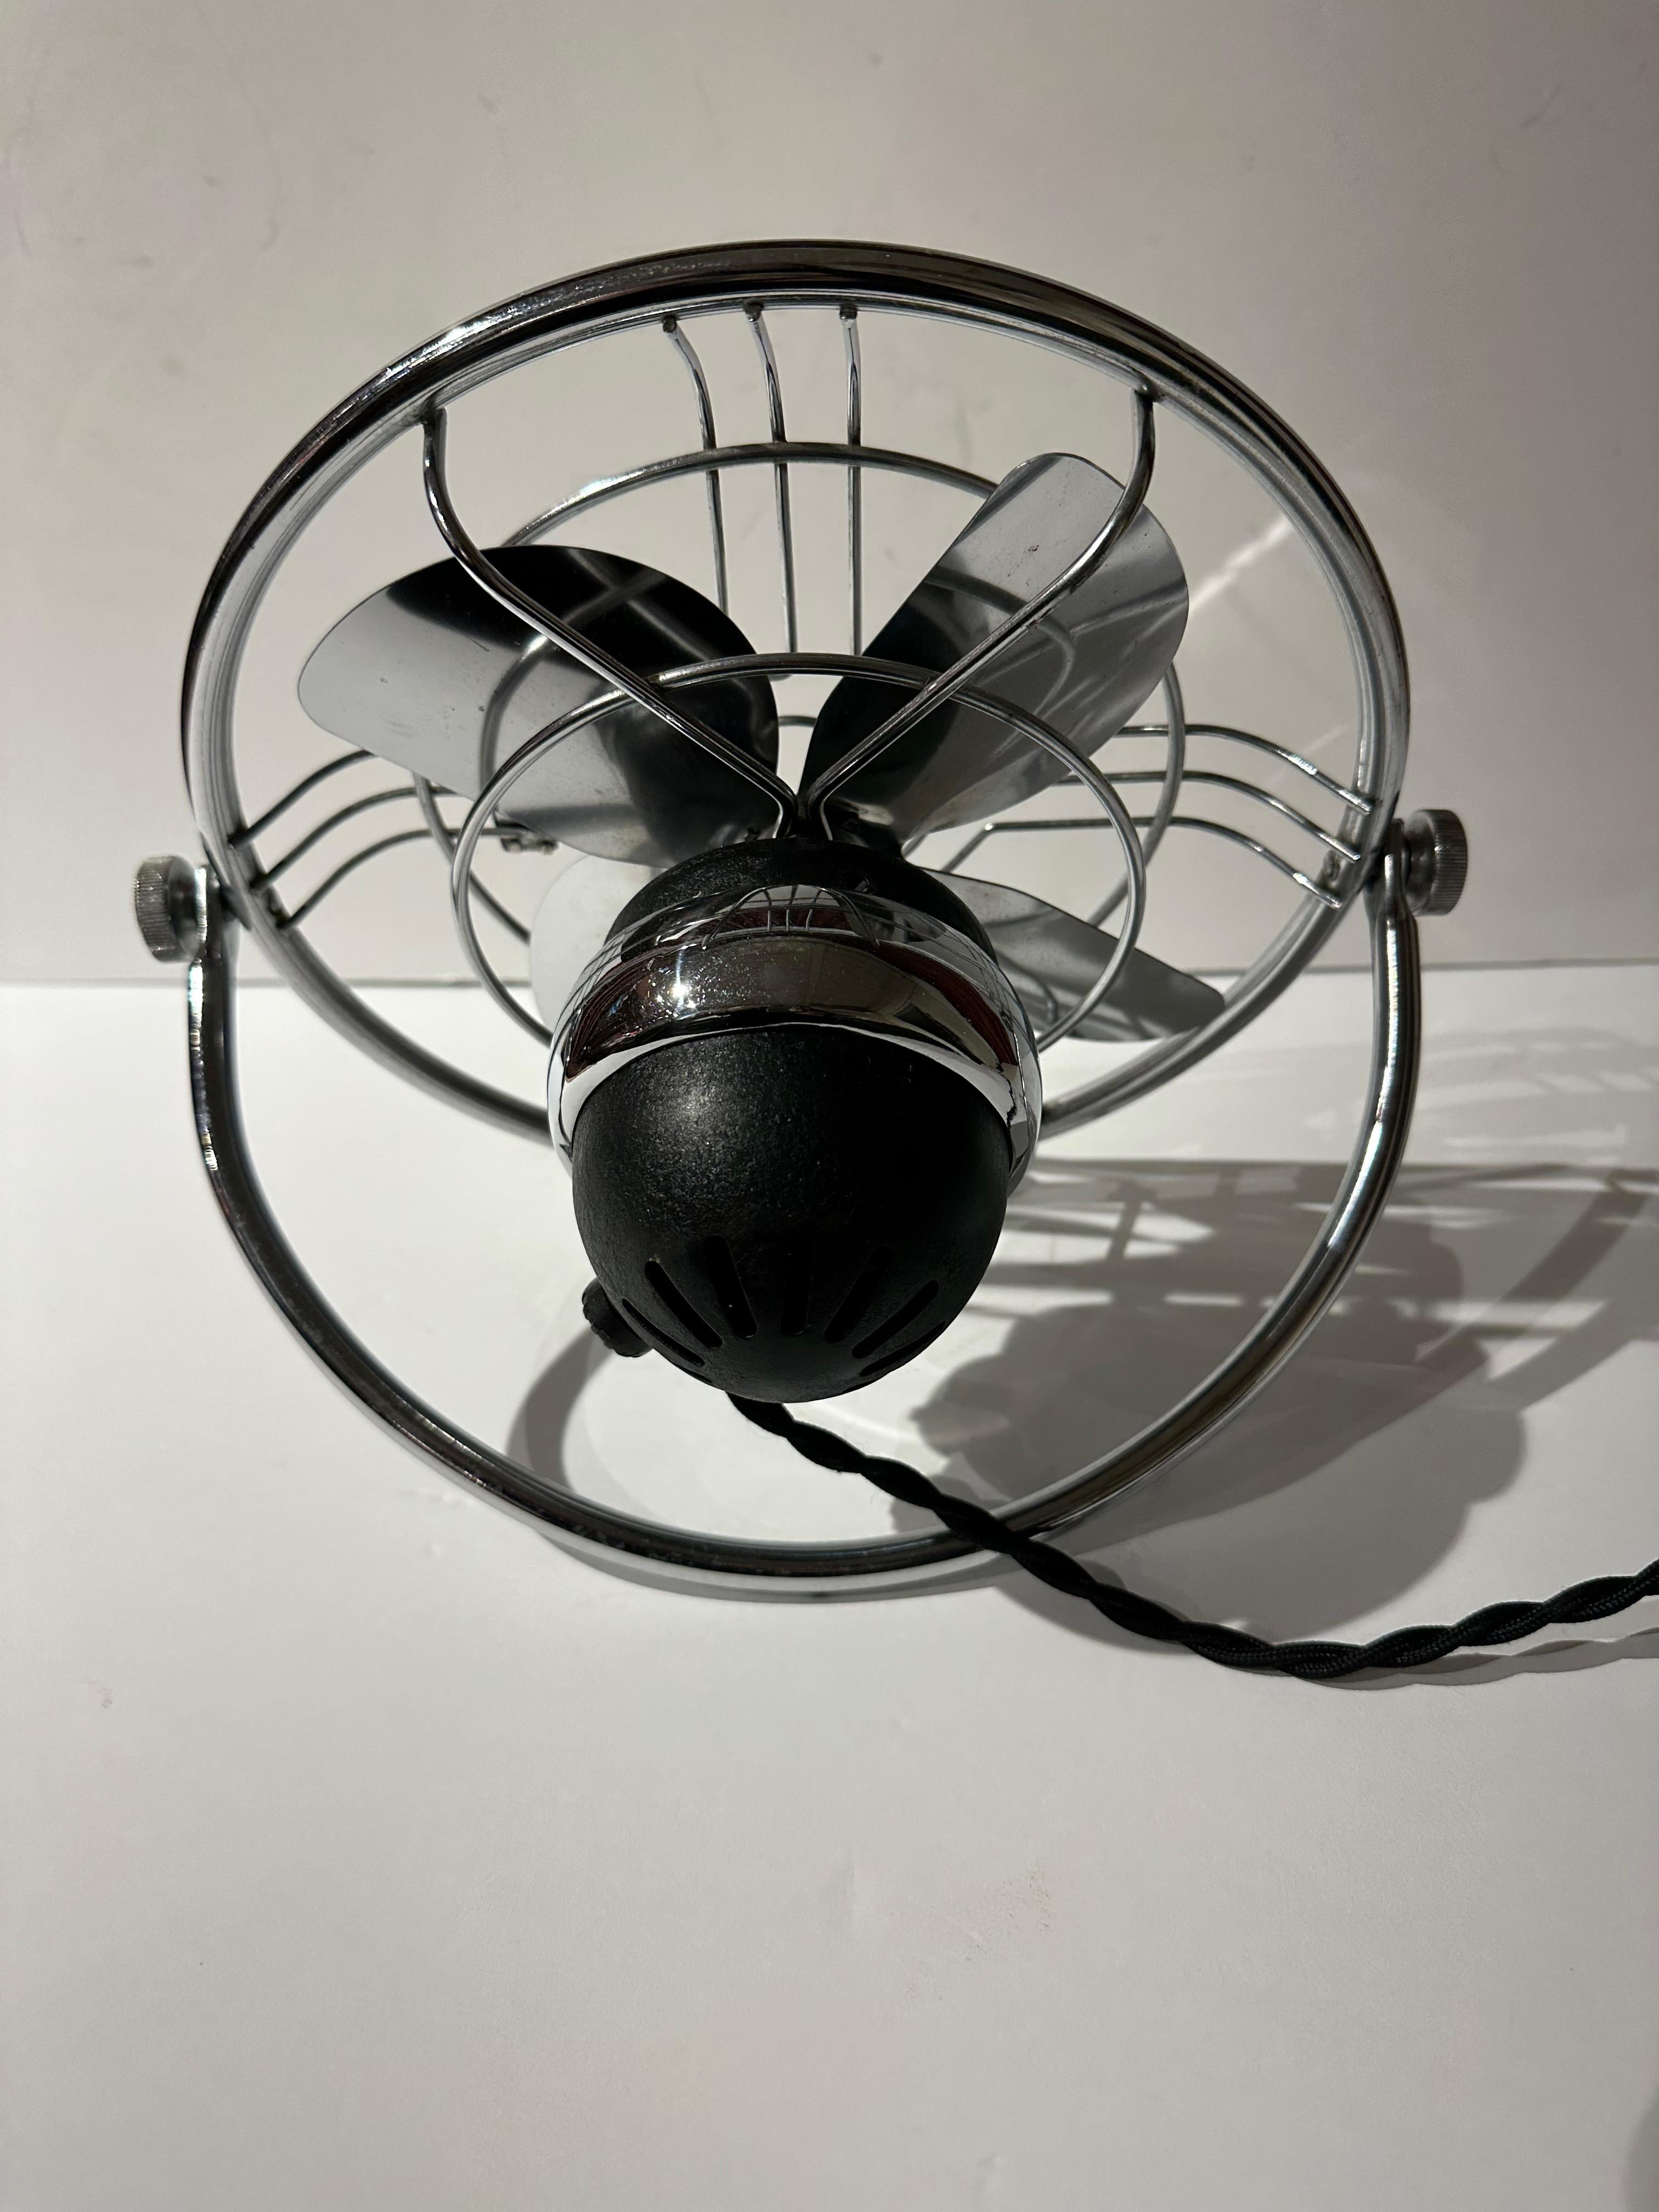 North American Art Deco Chromed Table  Fan the Jack Frost Model  by Knapp Monarch